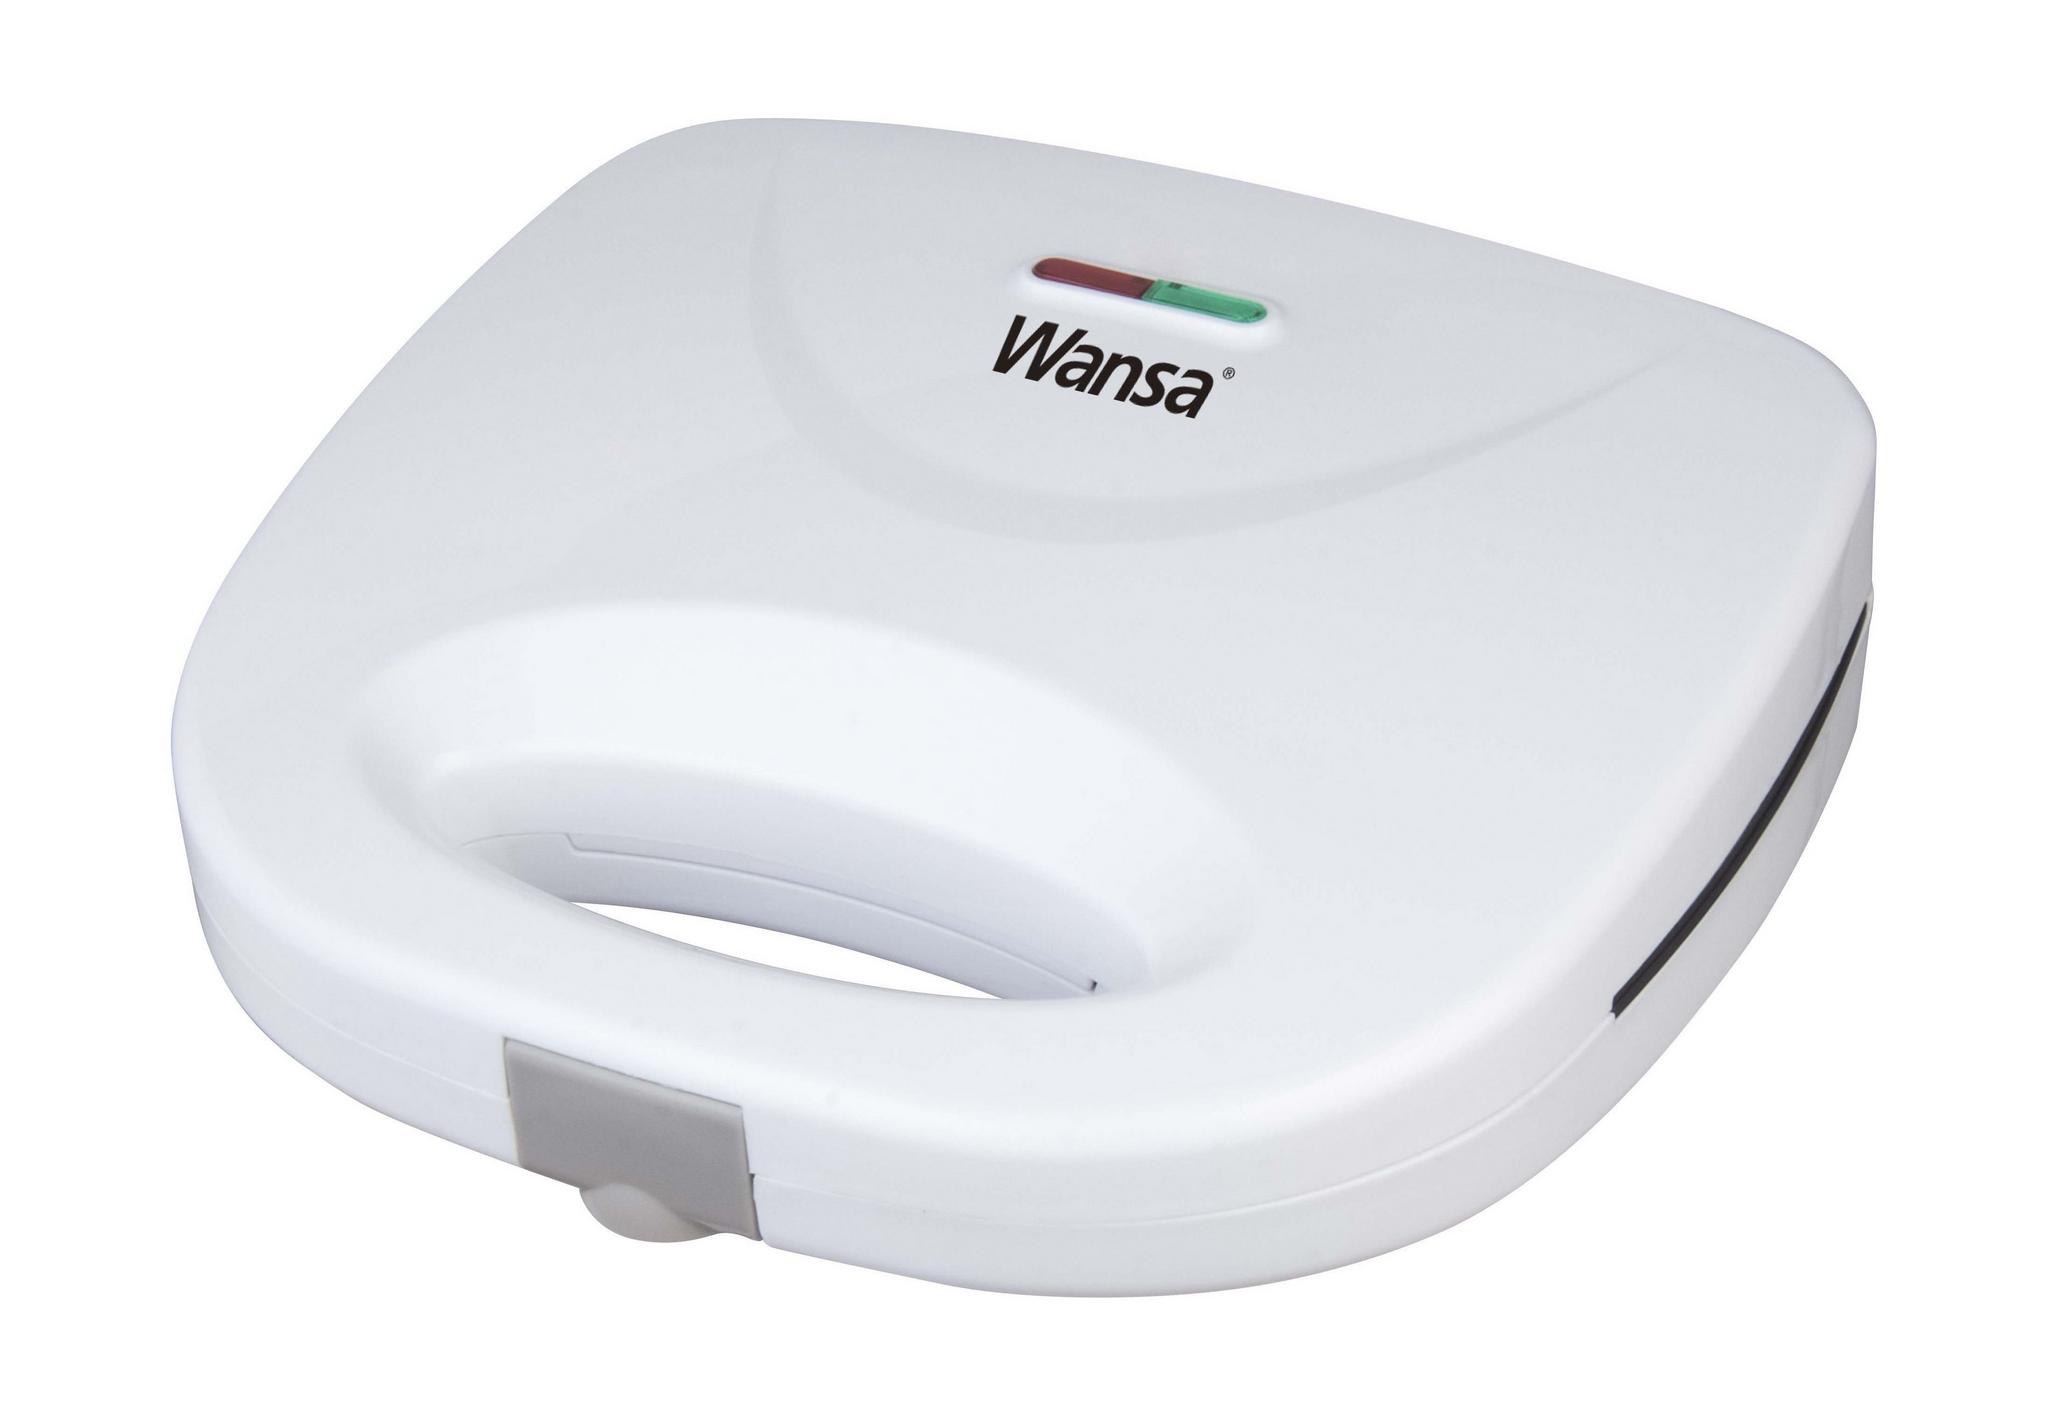 Wansa Sandwich Griller 700 Watts (ST1008) - White